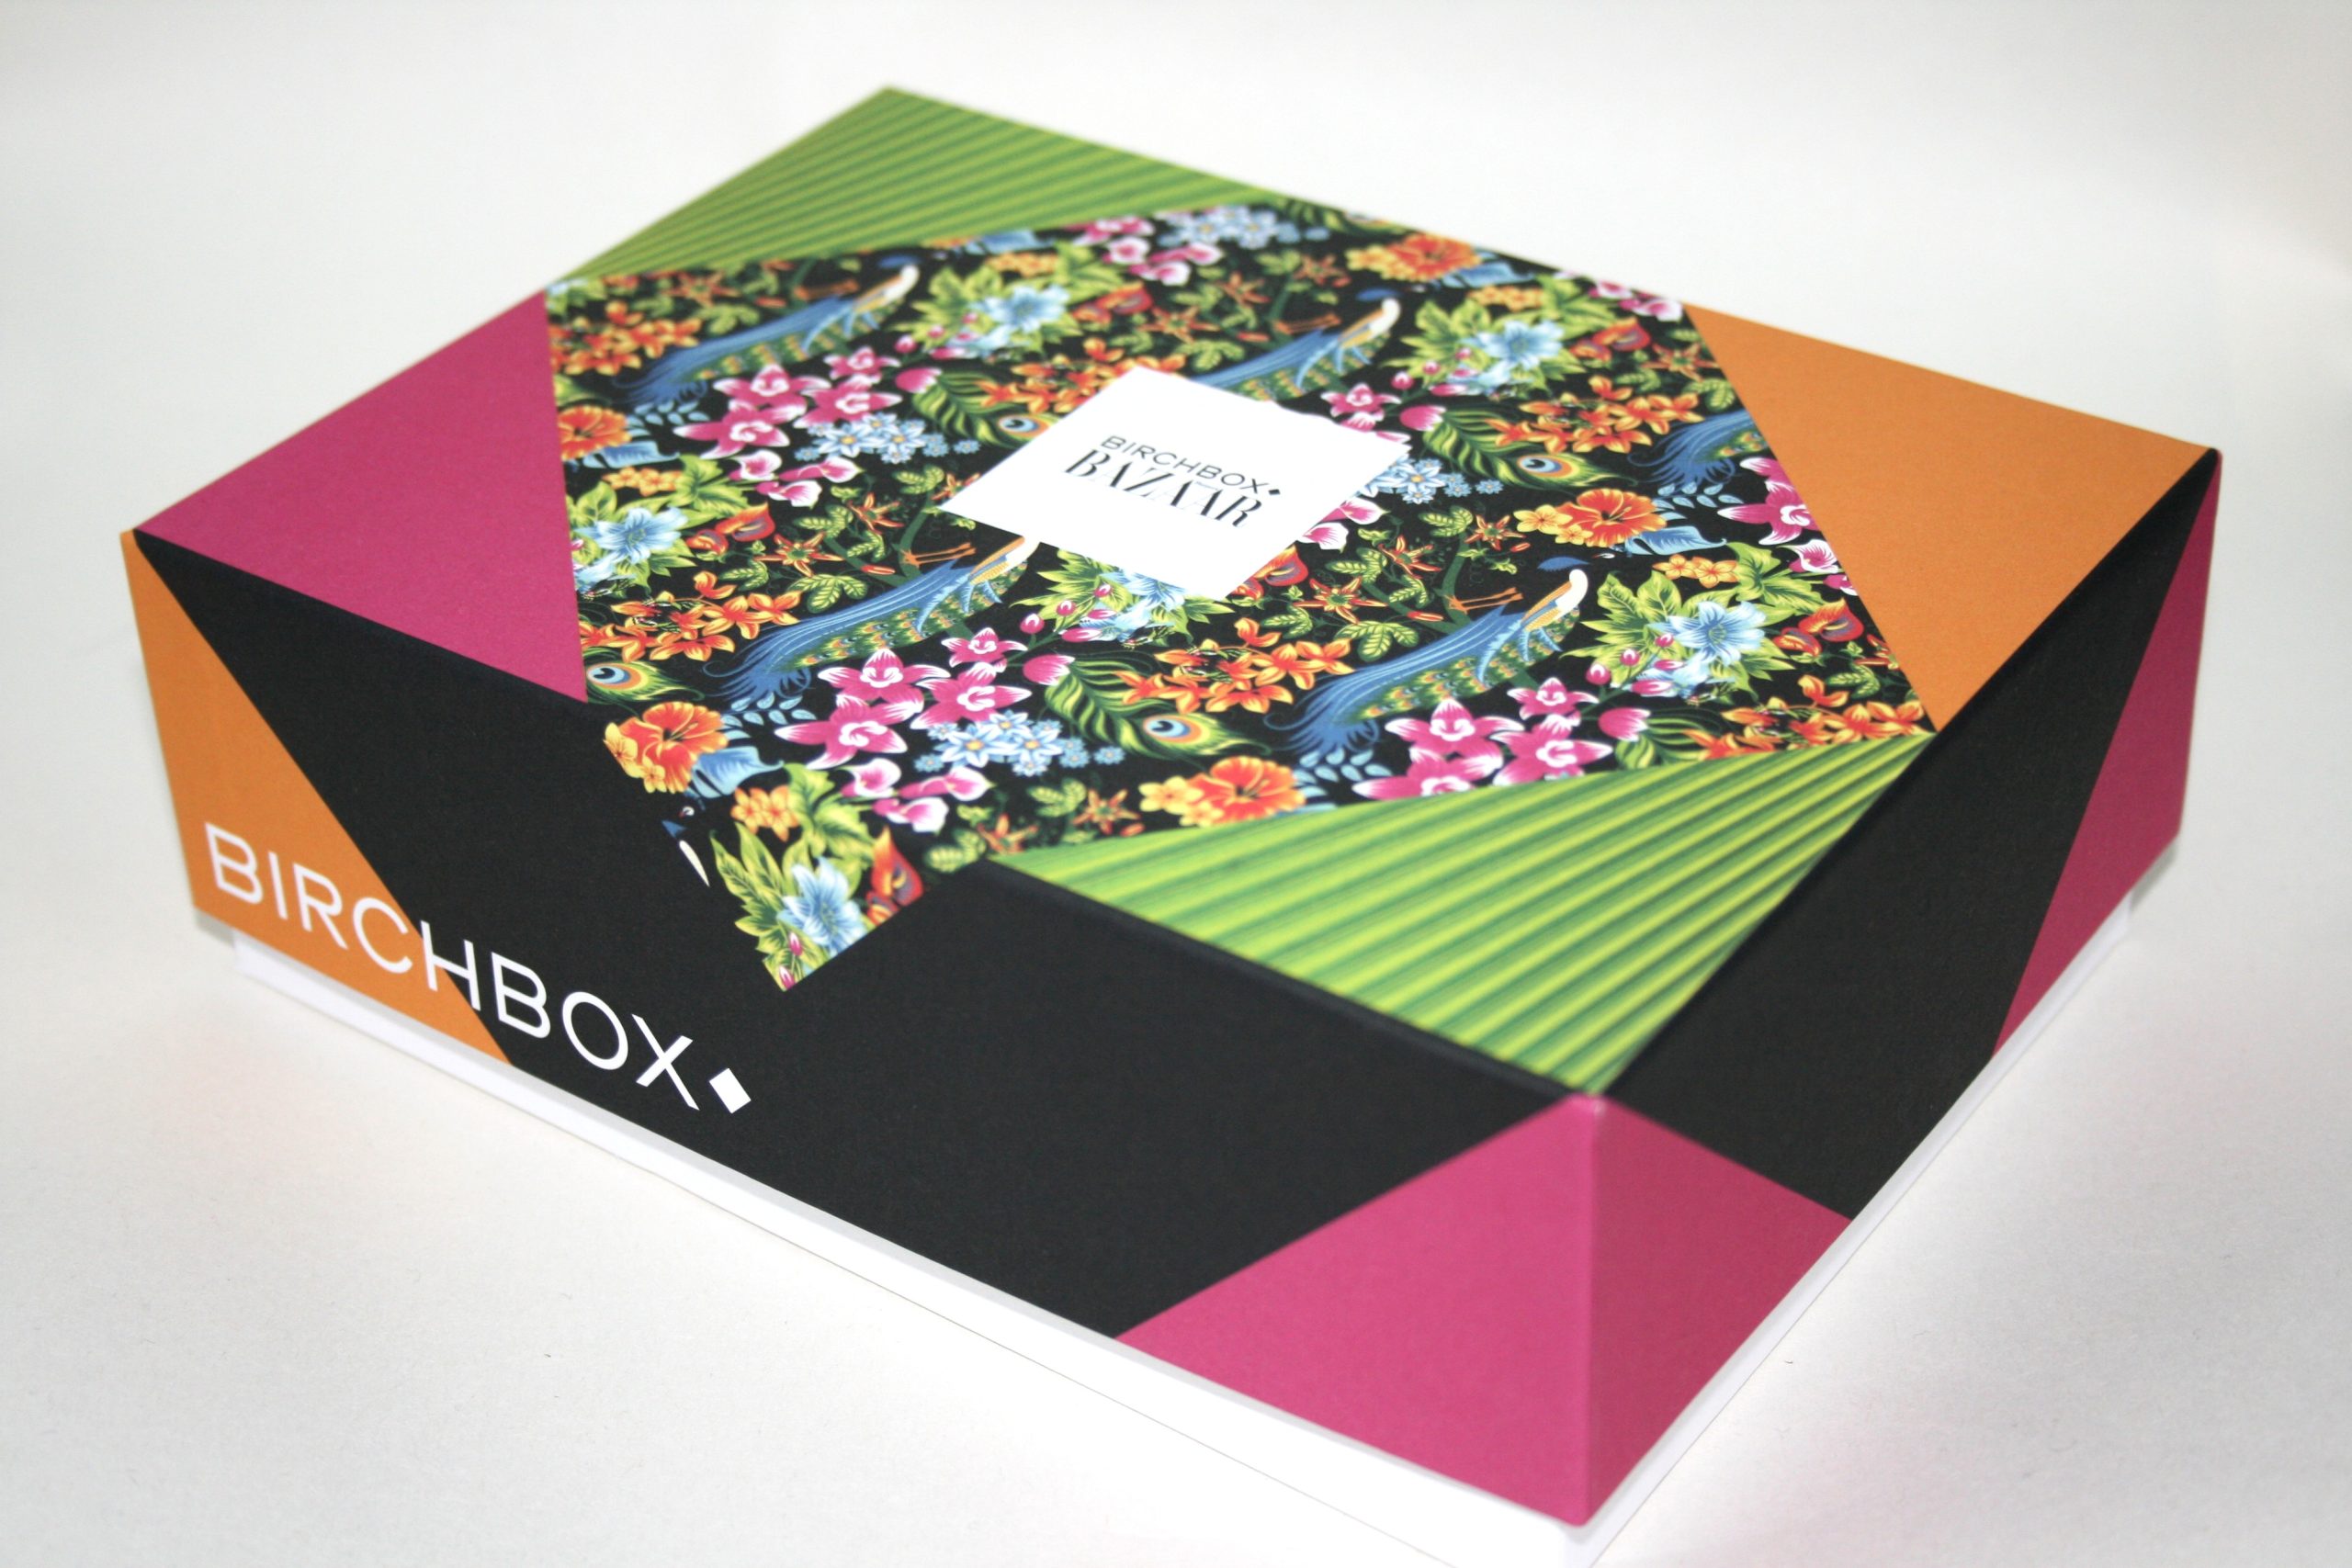 Birchbox May 2014 (Harper’s Bazaar Collaboration)